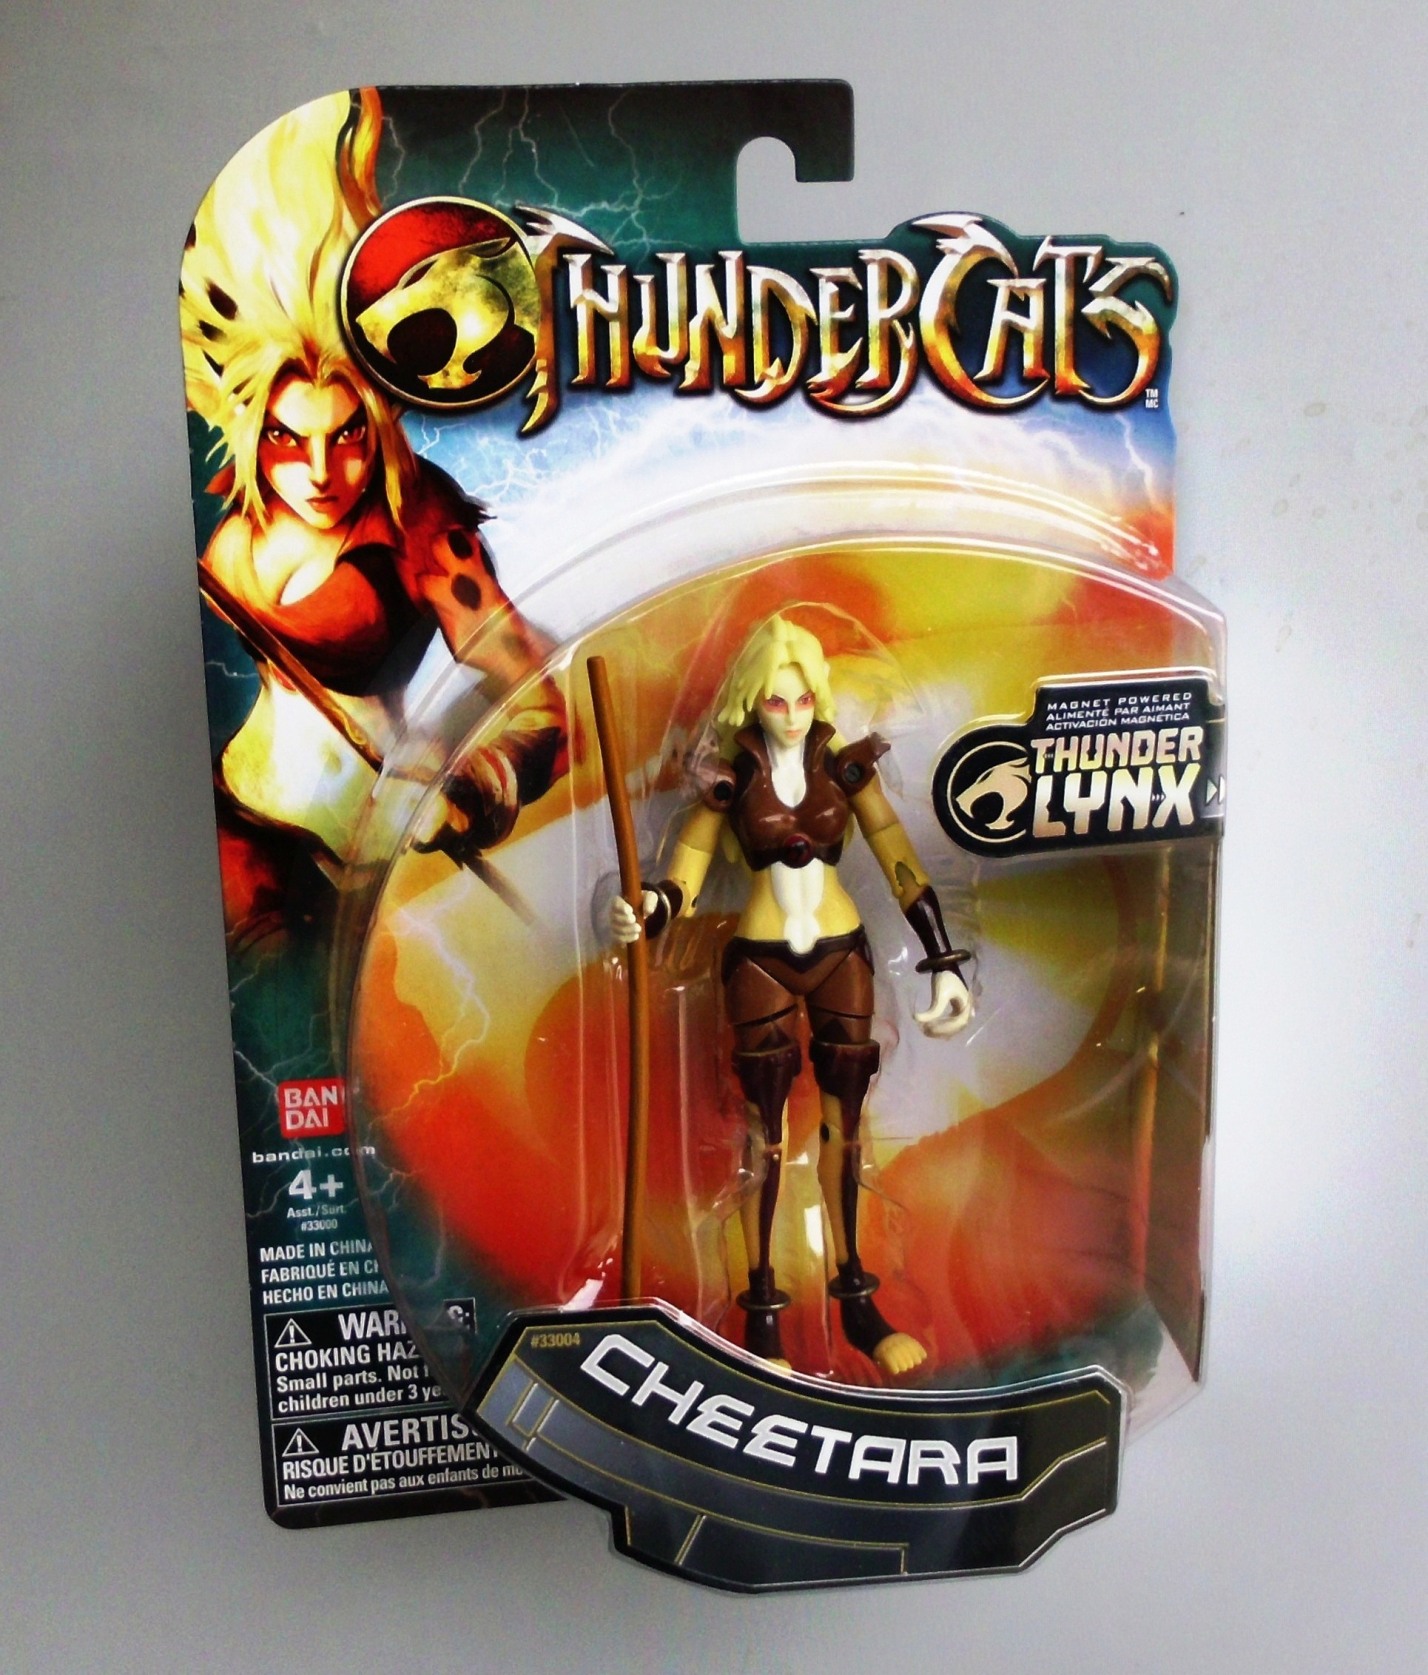 8 Cards Per Pack Lot of 24 Thundercats Bandai Trading Card Packs Box Count 